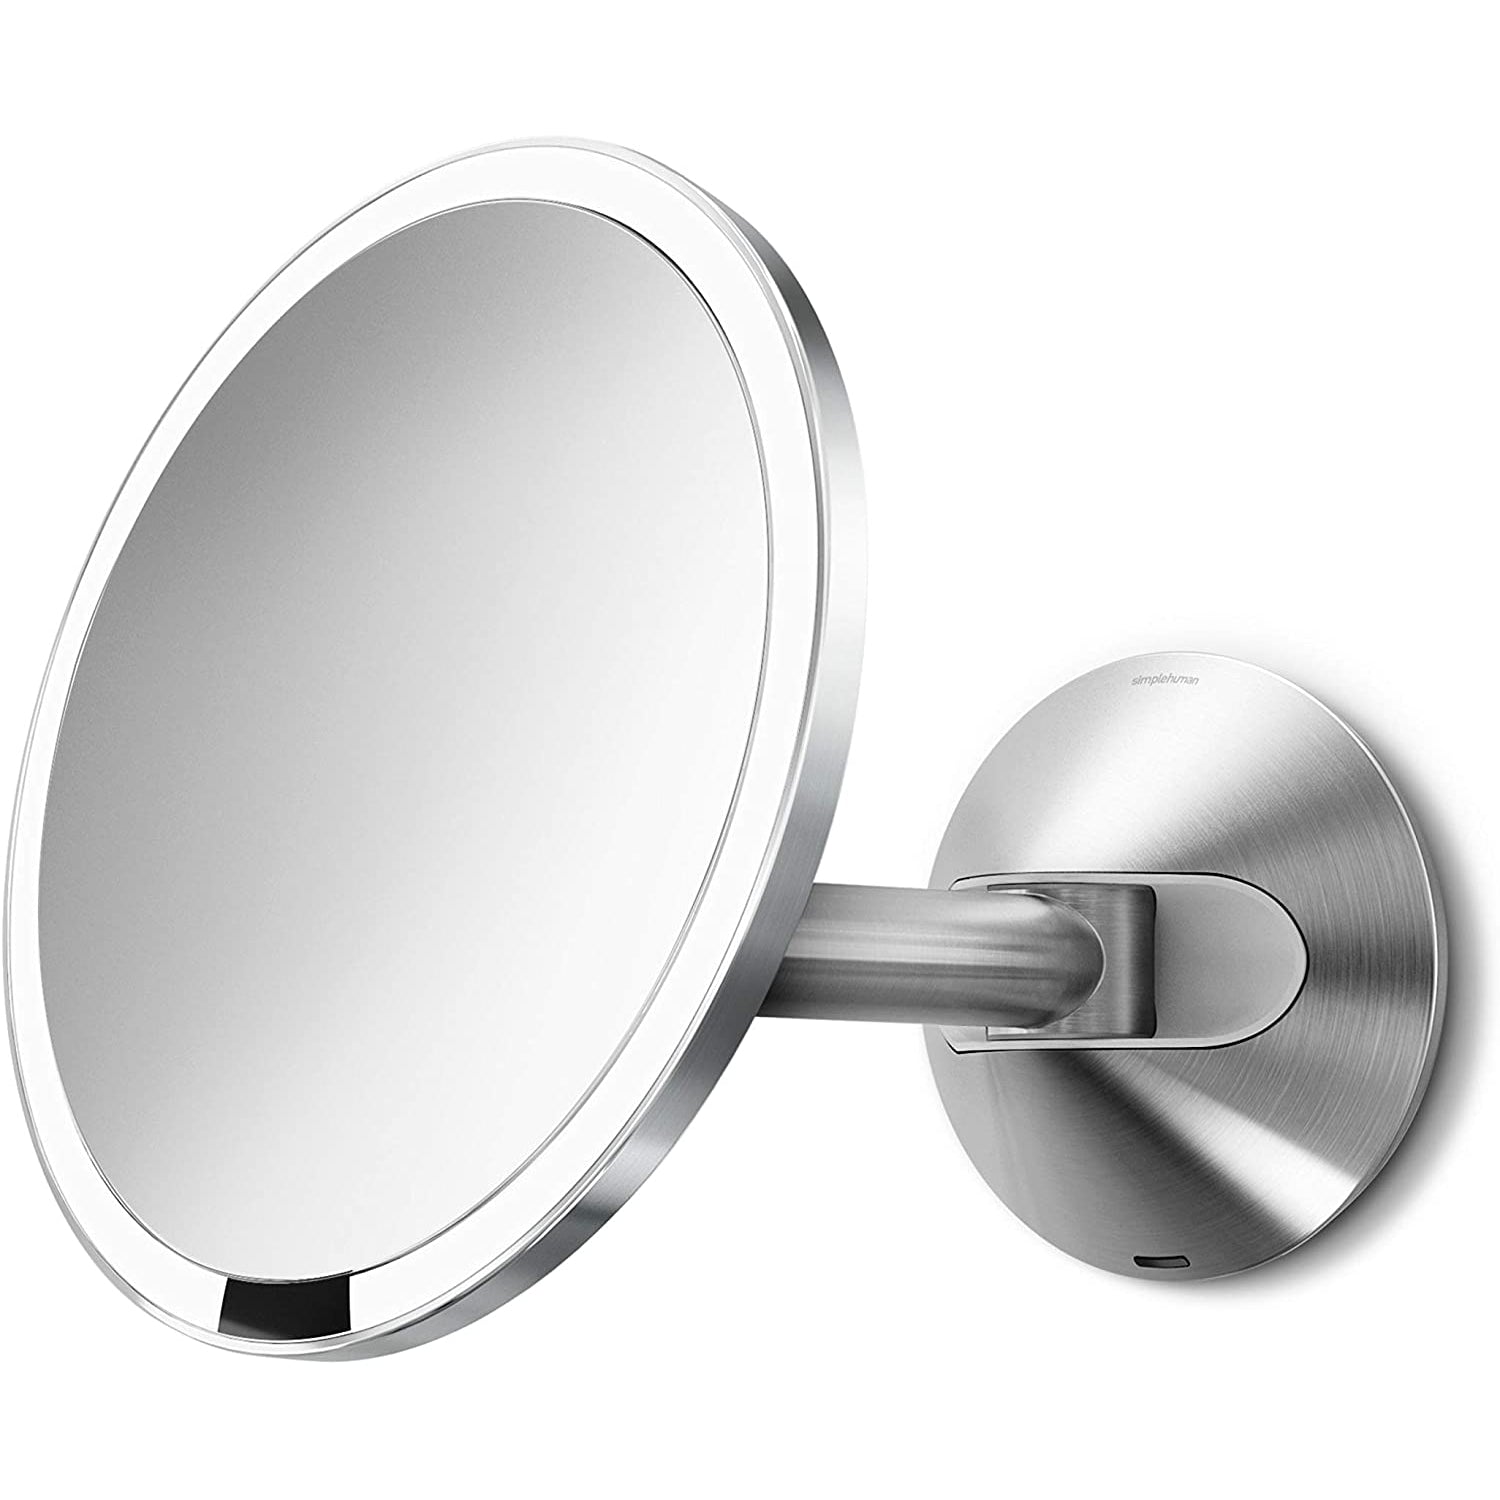 Simplehuman Wall Mounted Sensor Mirror (ST3002) - Brushed Stainless Steel